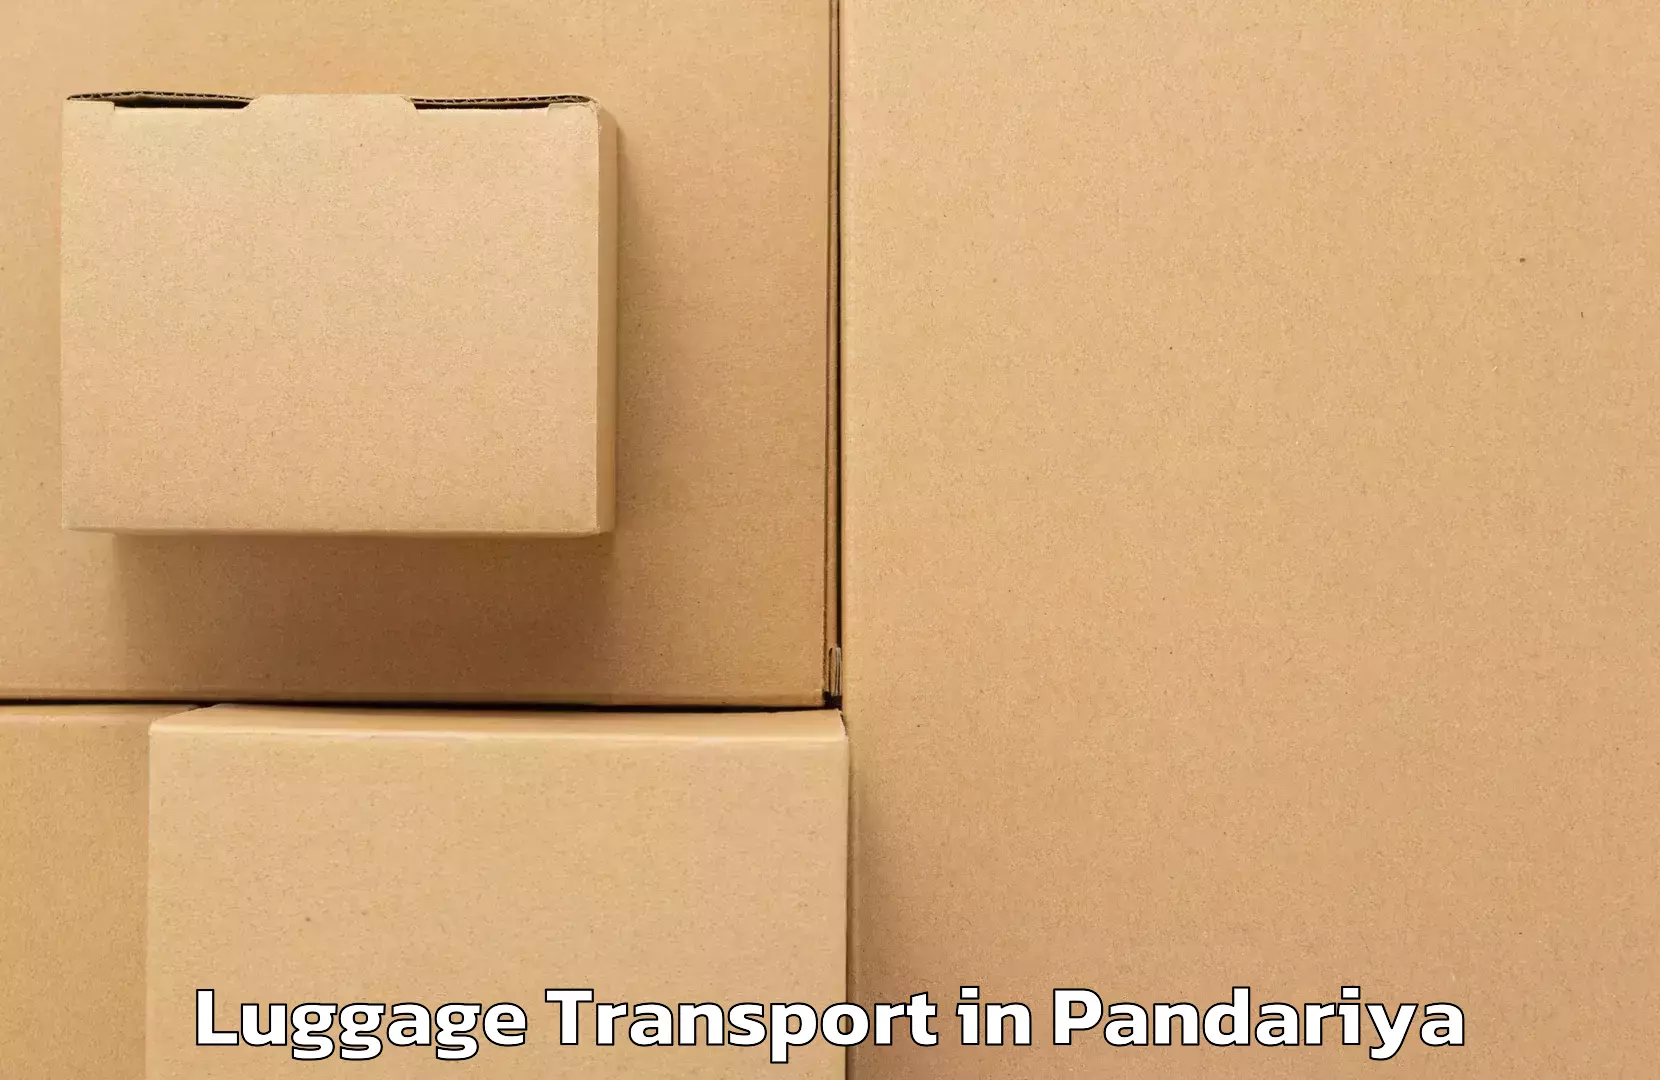 Suburban luggage delivery in Pandariya